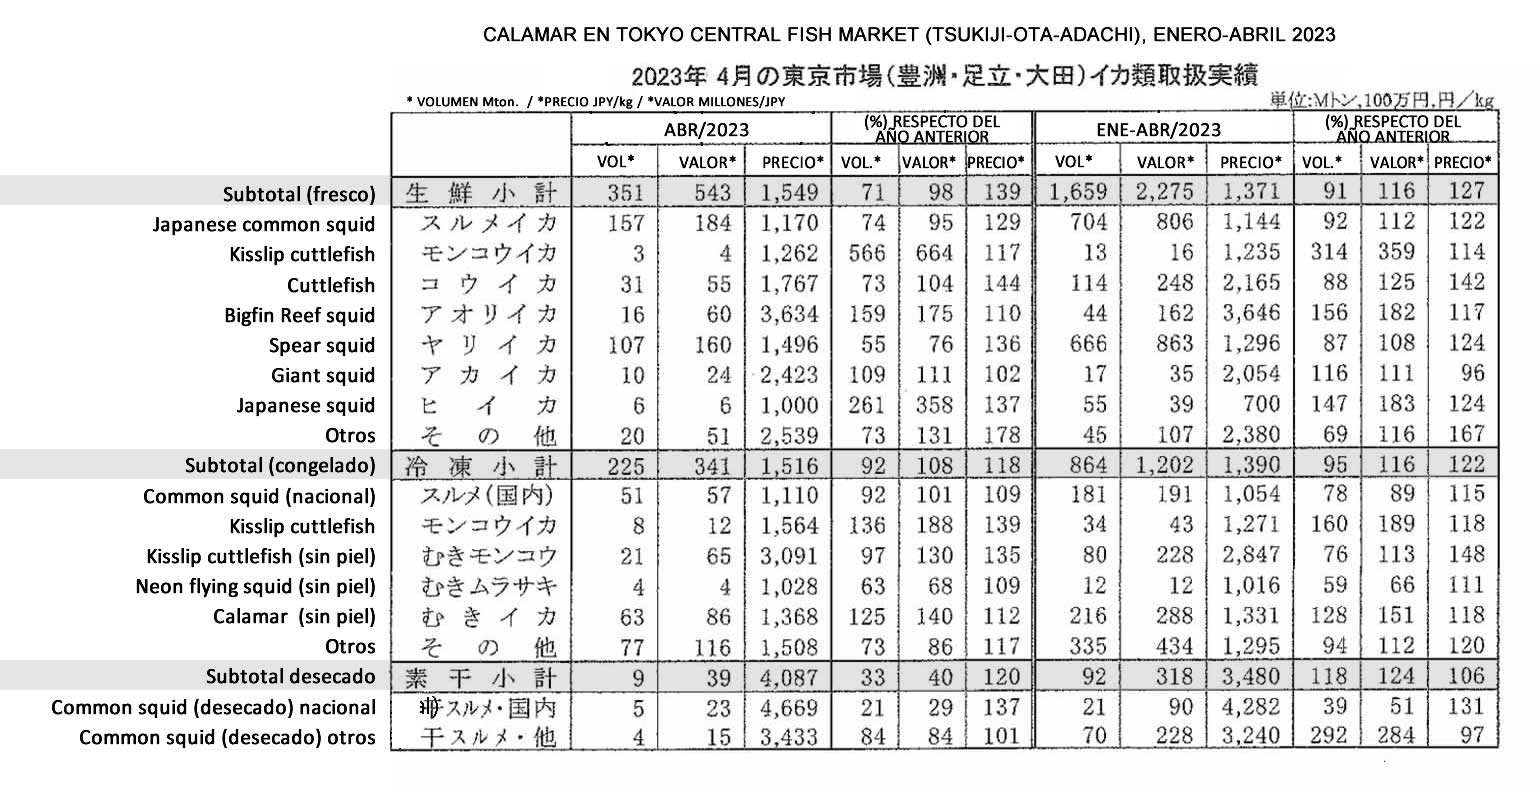 esp-Calamar en Tokyo Central Fish Market2 FIS seafood_media.jpg